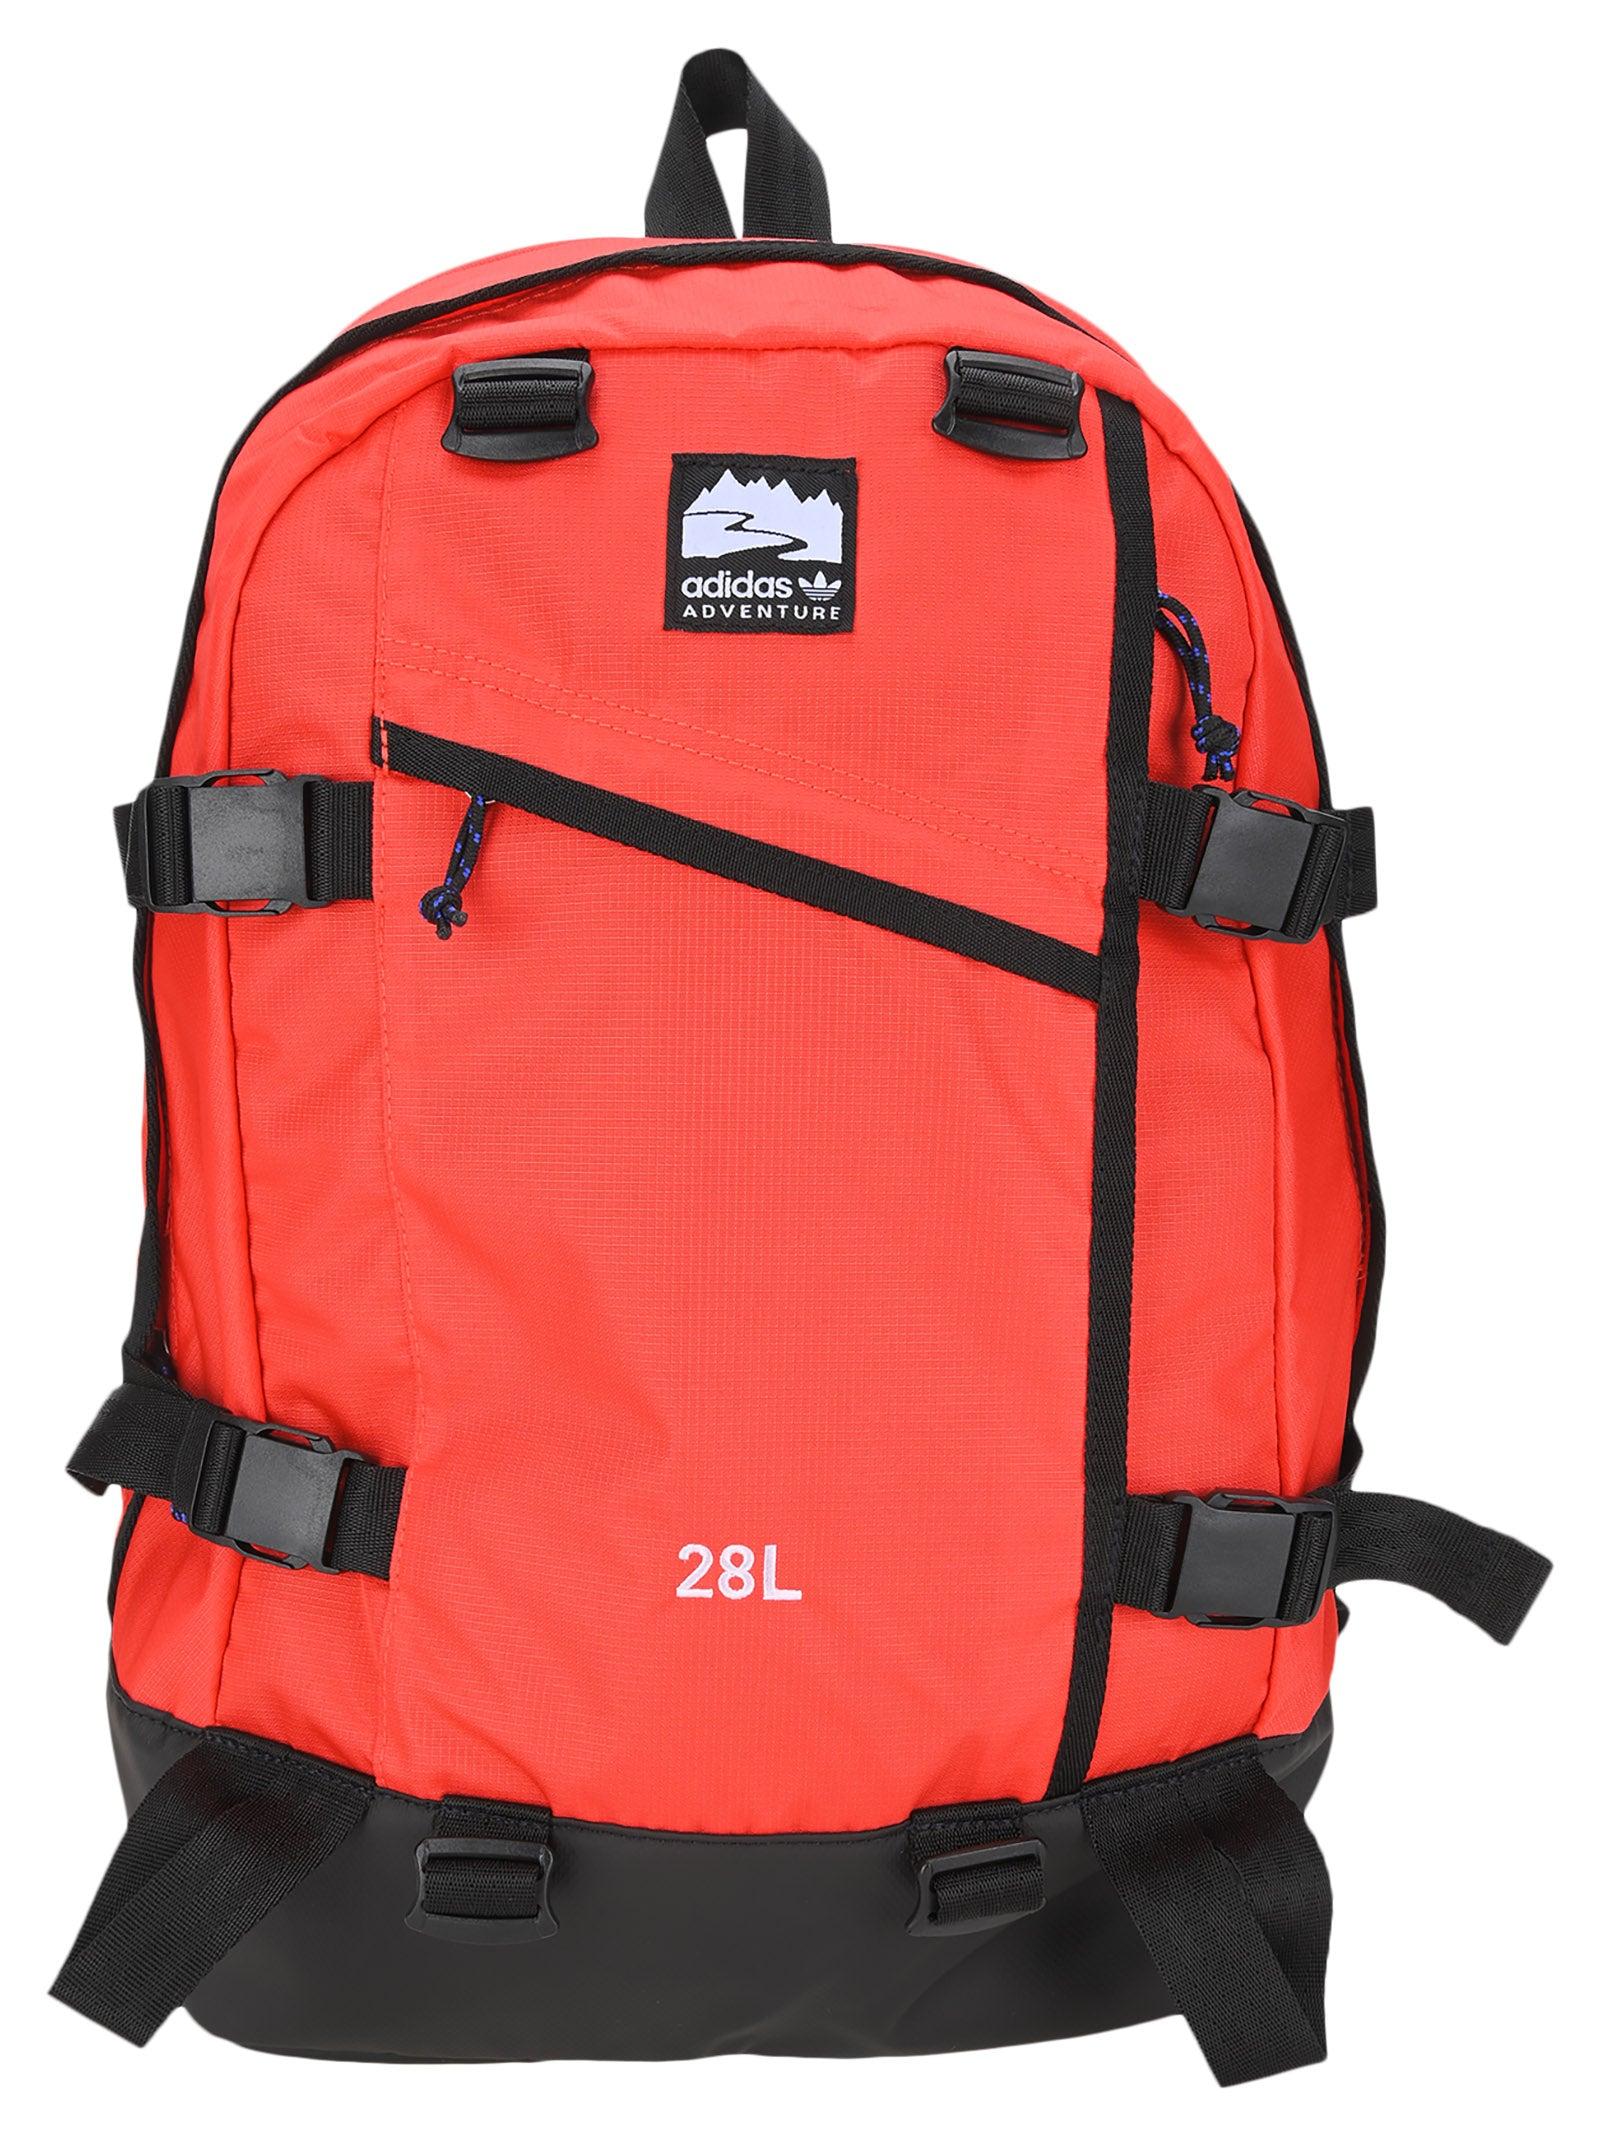 Adidas Adventure Backpack Large | lupon.gov.ph